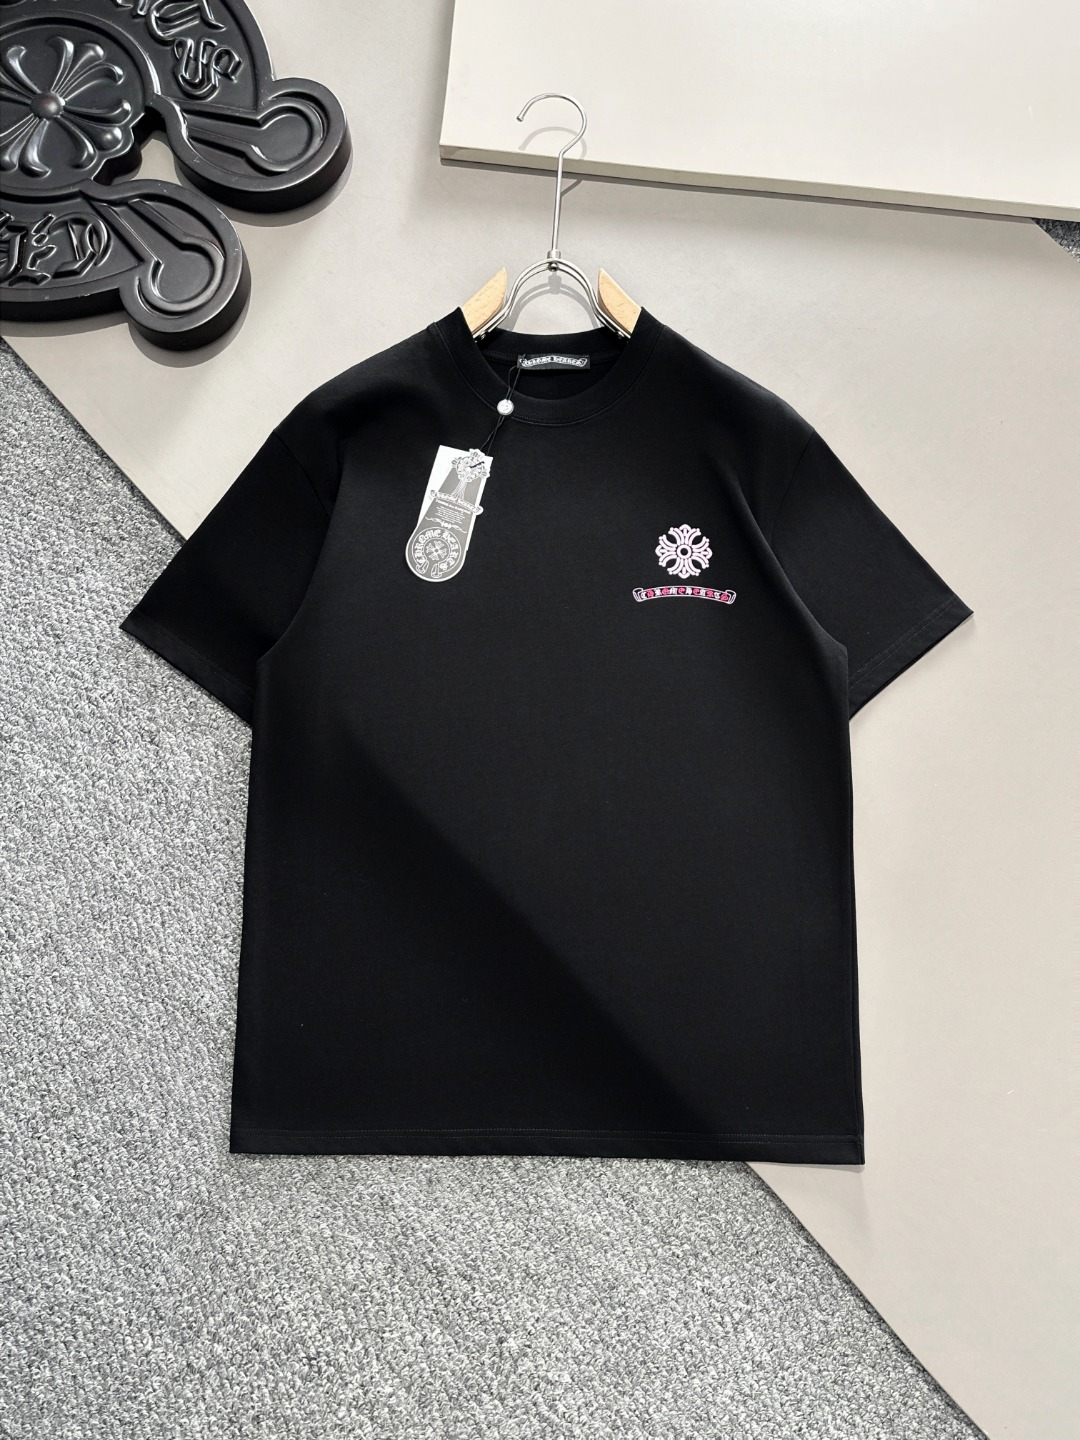 Chrome Hearts Kleding T-Shirt Zwart Wit Katoen Lente/Zomercollectie Fashion Korte mouw